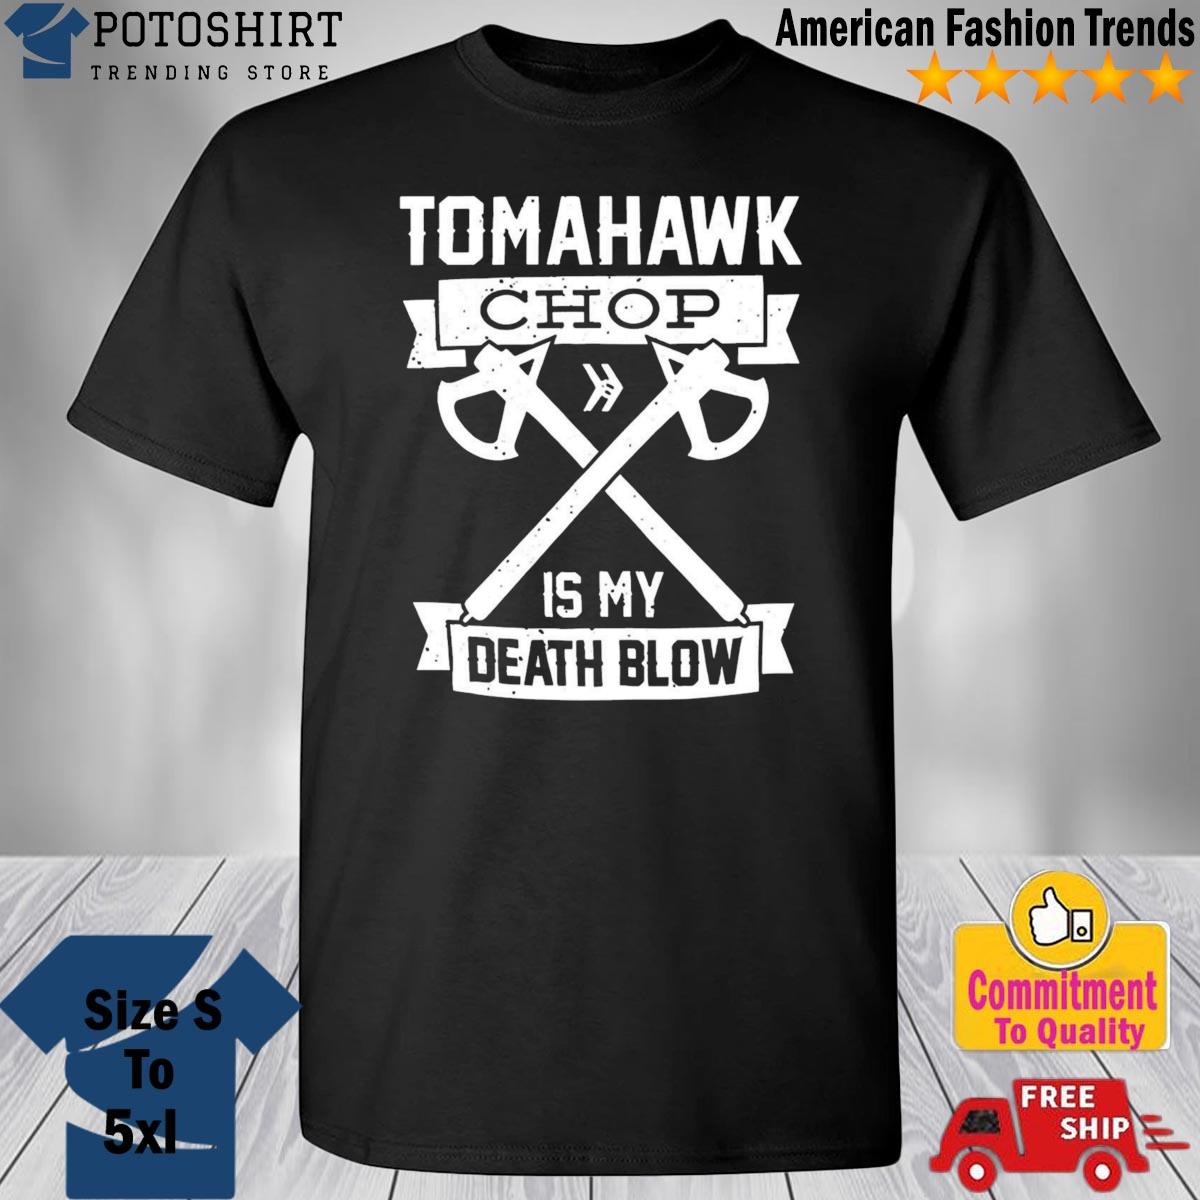 Tomahawk chop is my death blow shirt, hoodie, sweatshirt and tank top